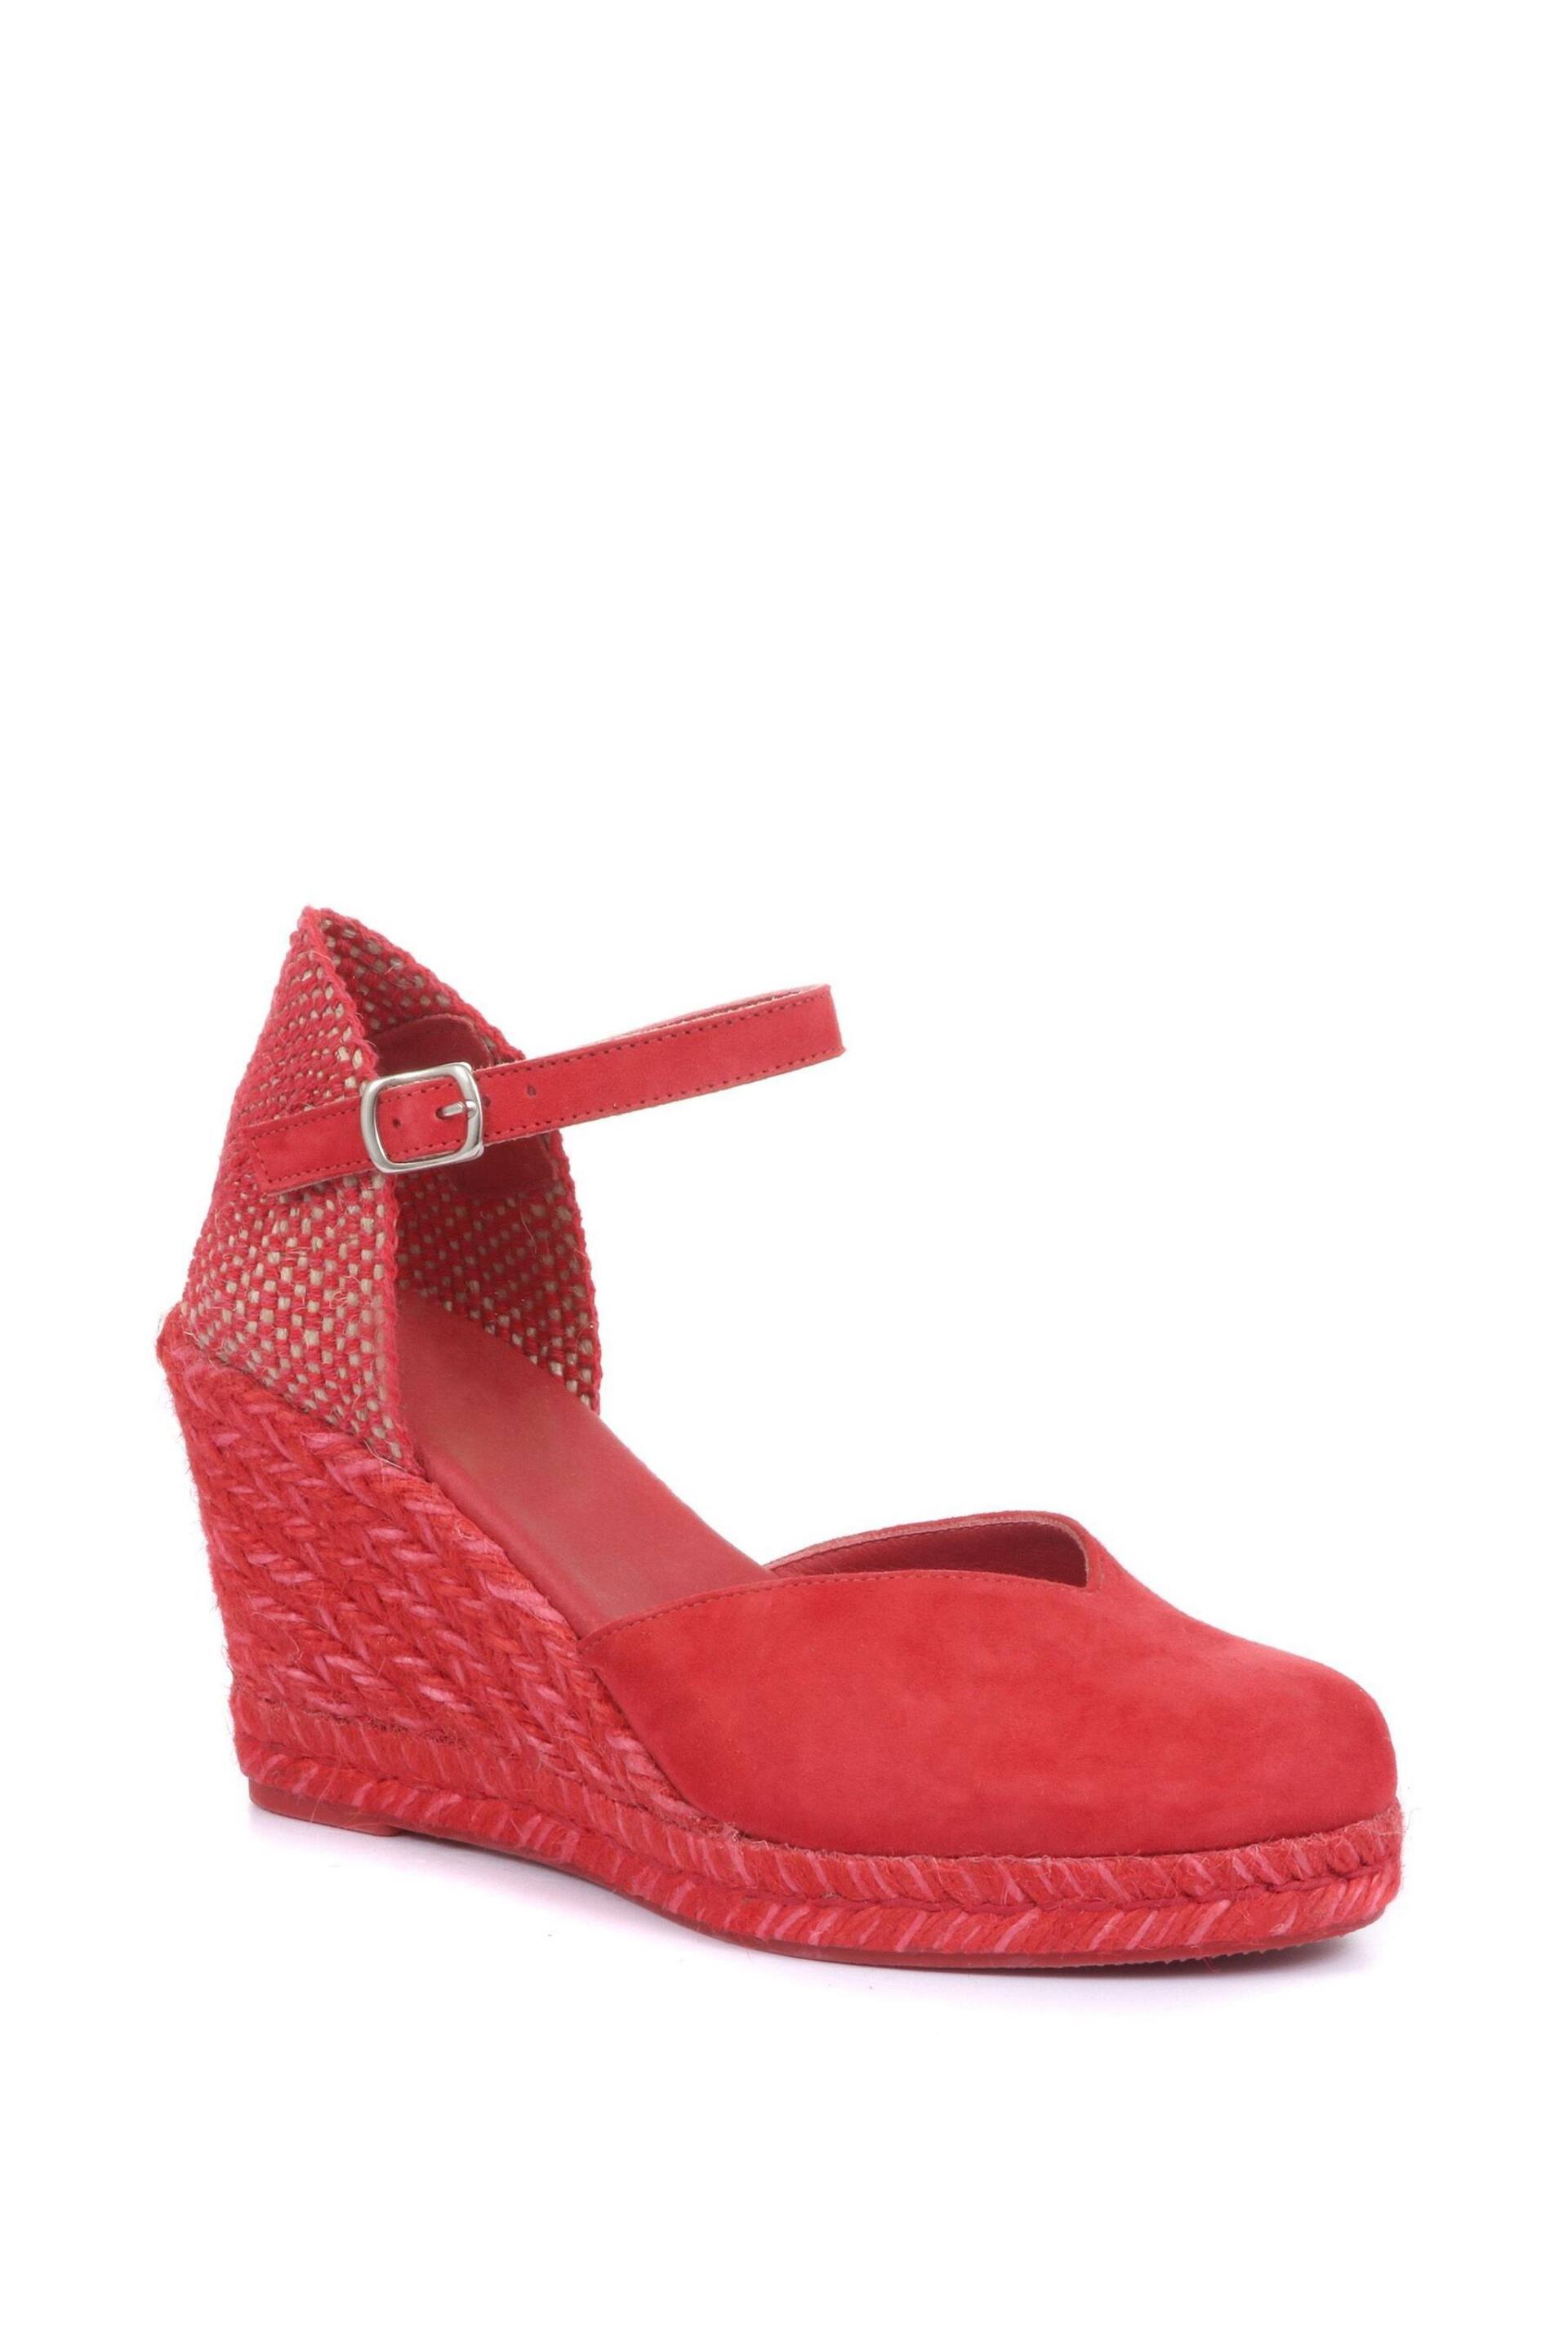 Jones Bootmaker Arabella Wedge Shoes - Image 3 of 5